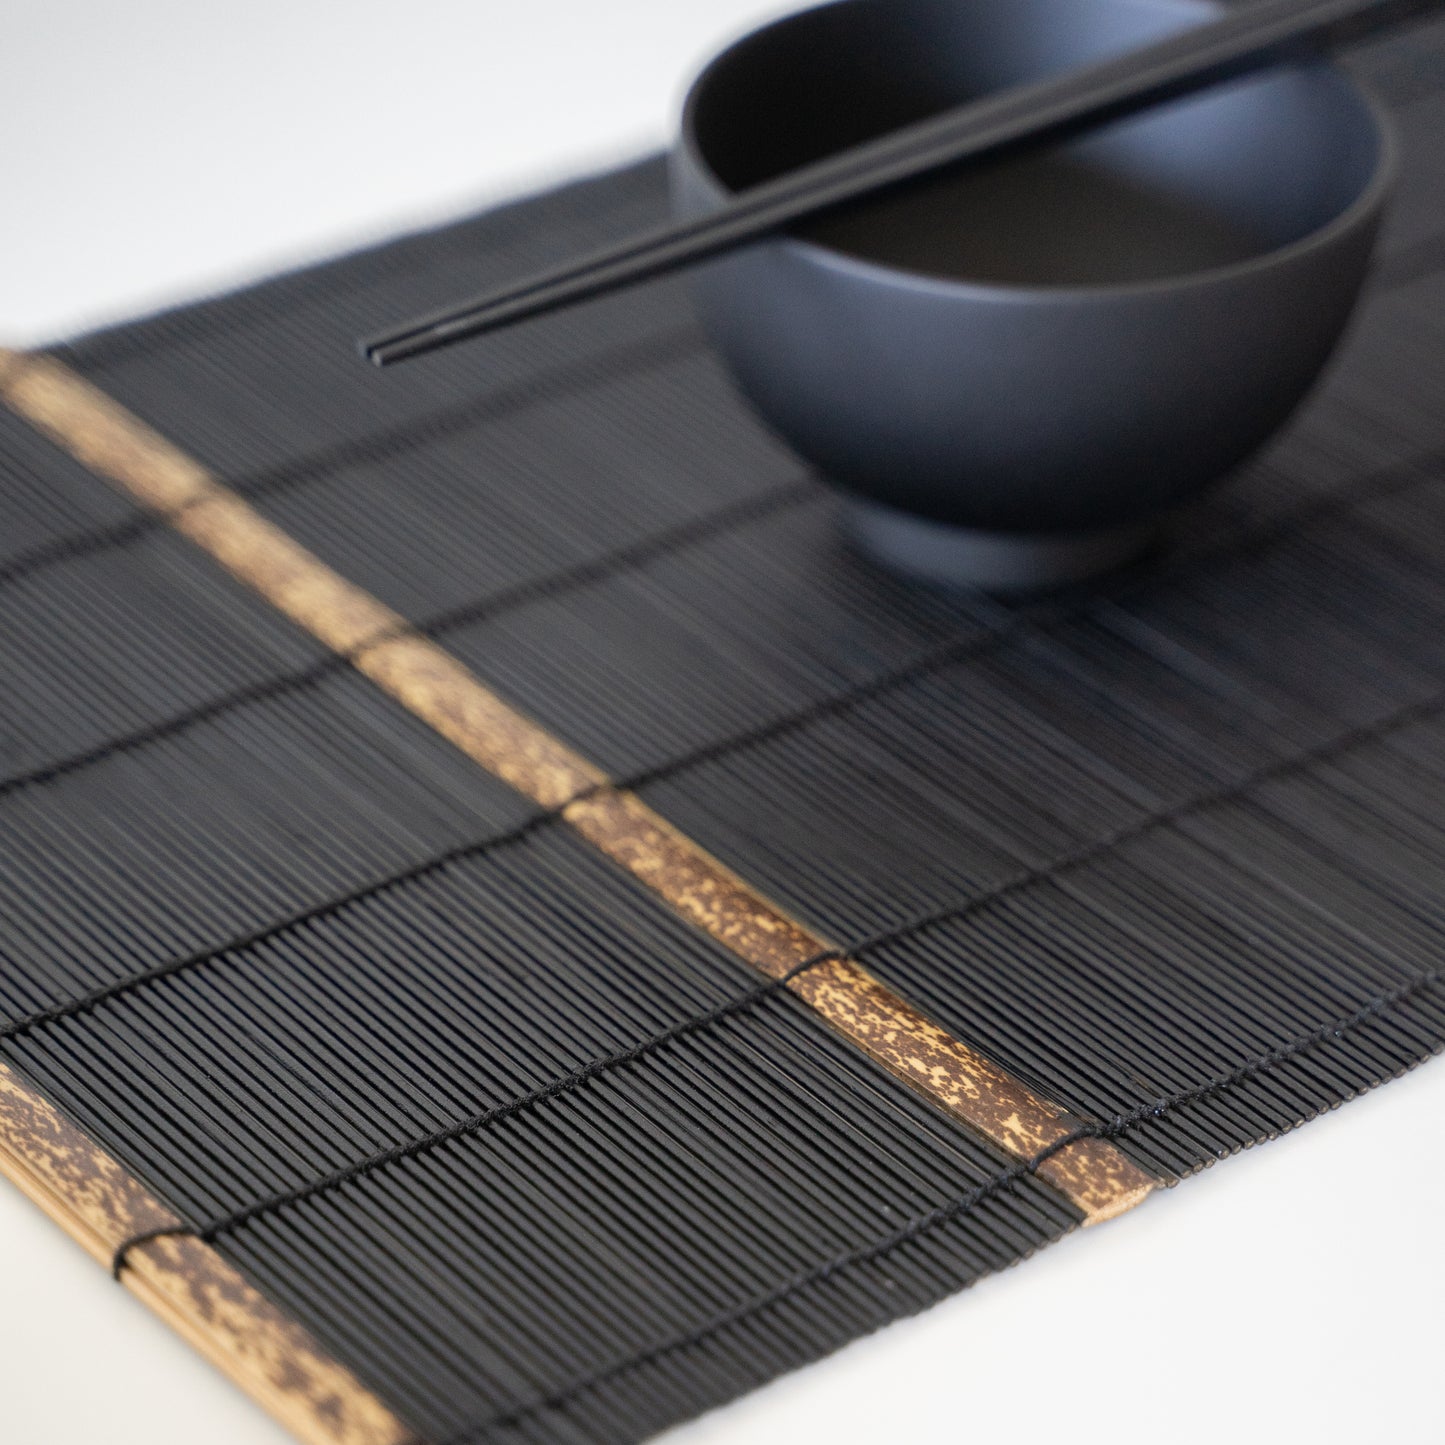 Bamboo Charcoal Coated Tableware Series - Ichiwan Ichizen Set